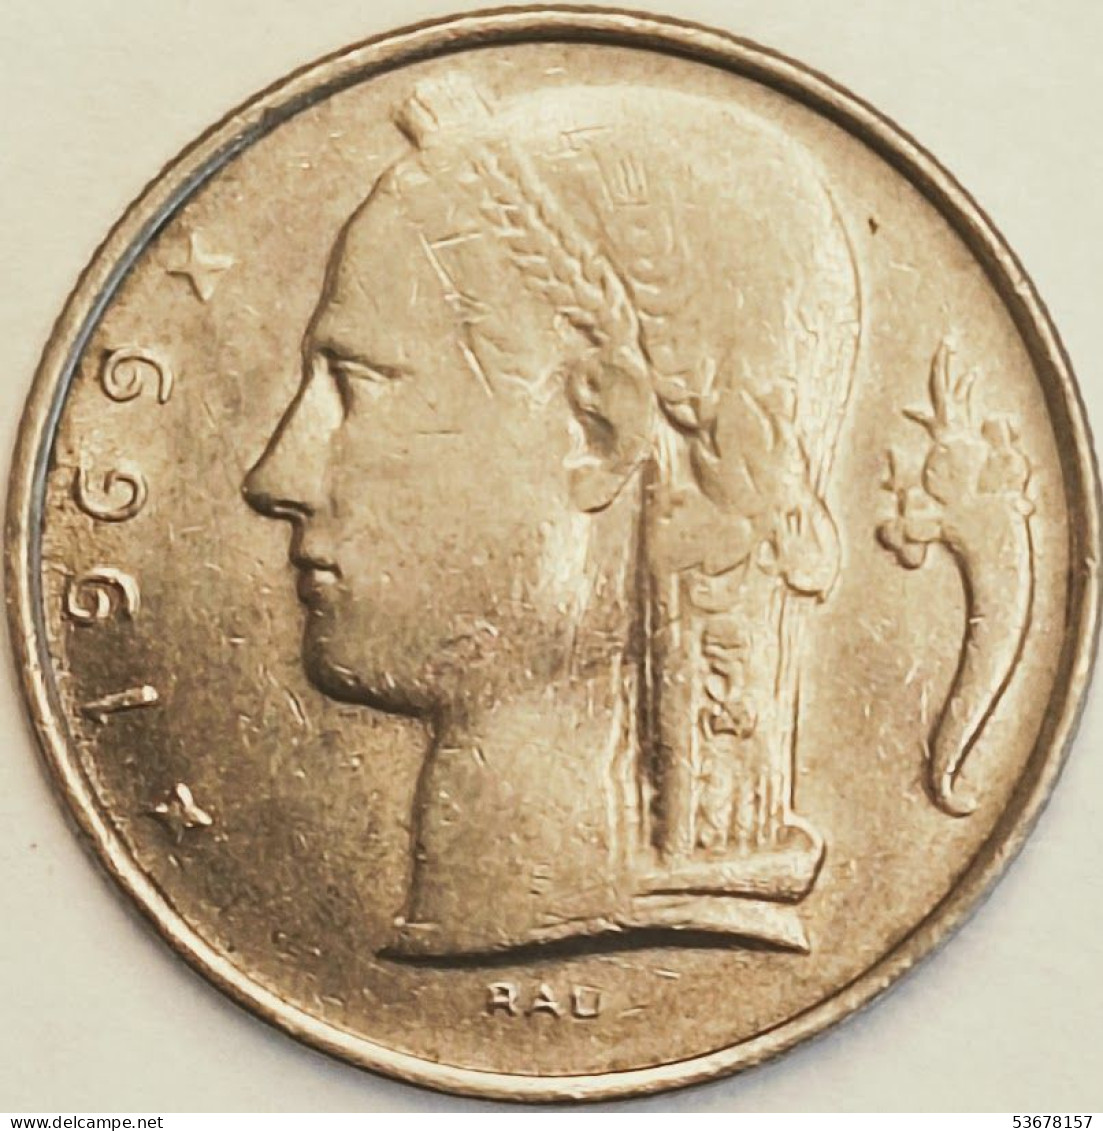 Belgium - 5 Francs 1969, KM# 135.1 (#3188) - 5 Frank